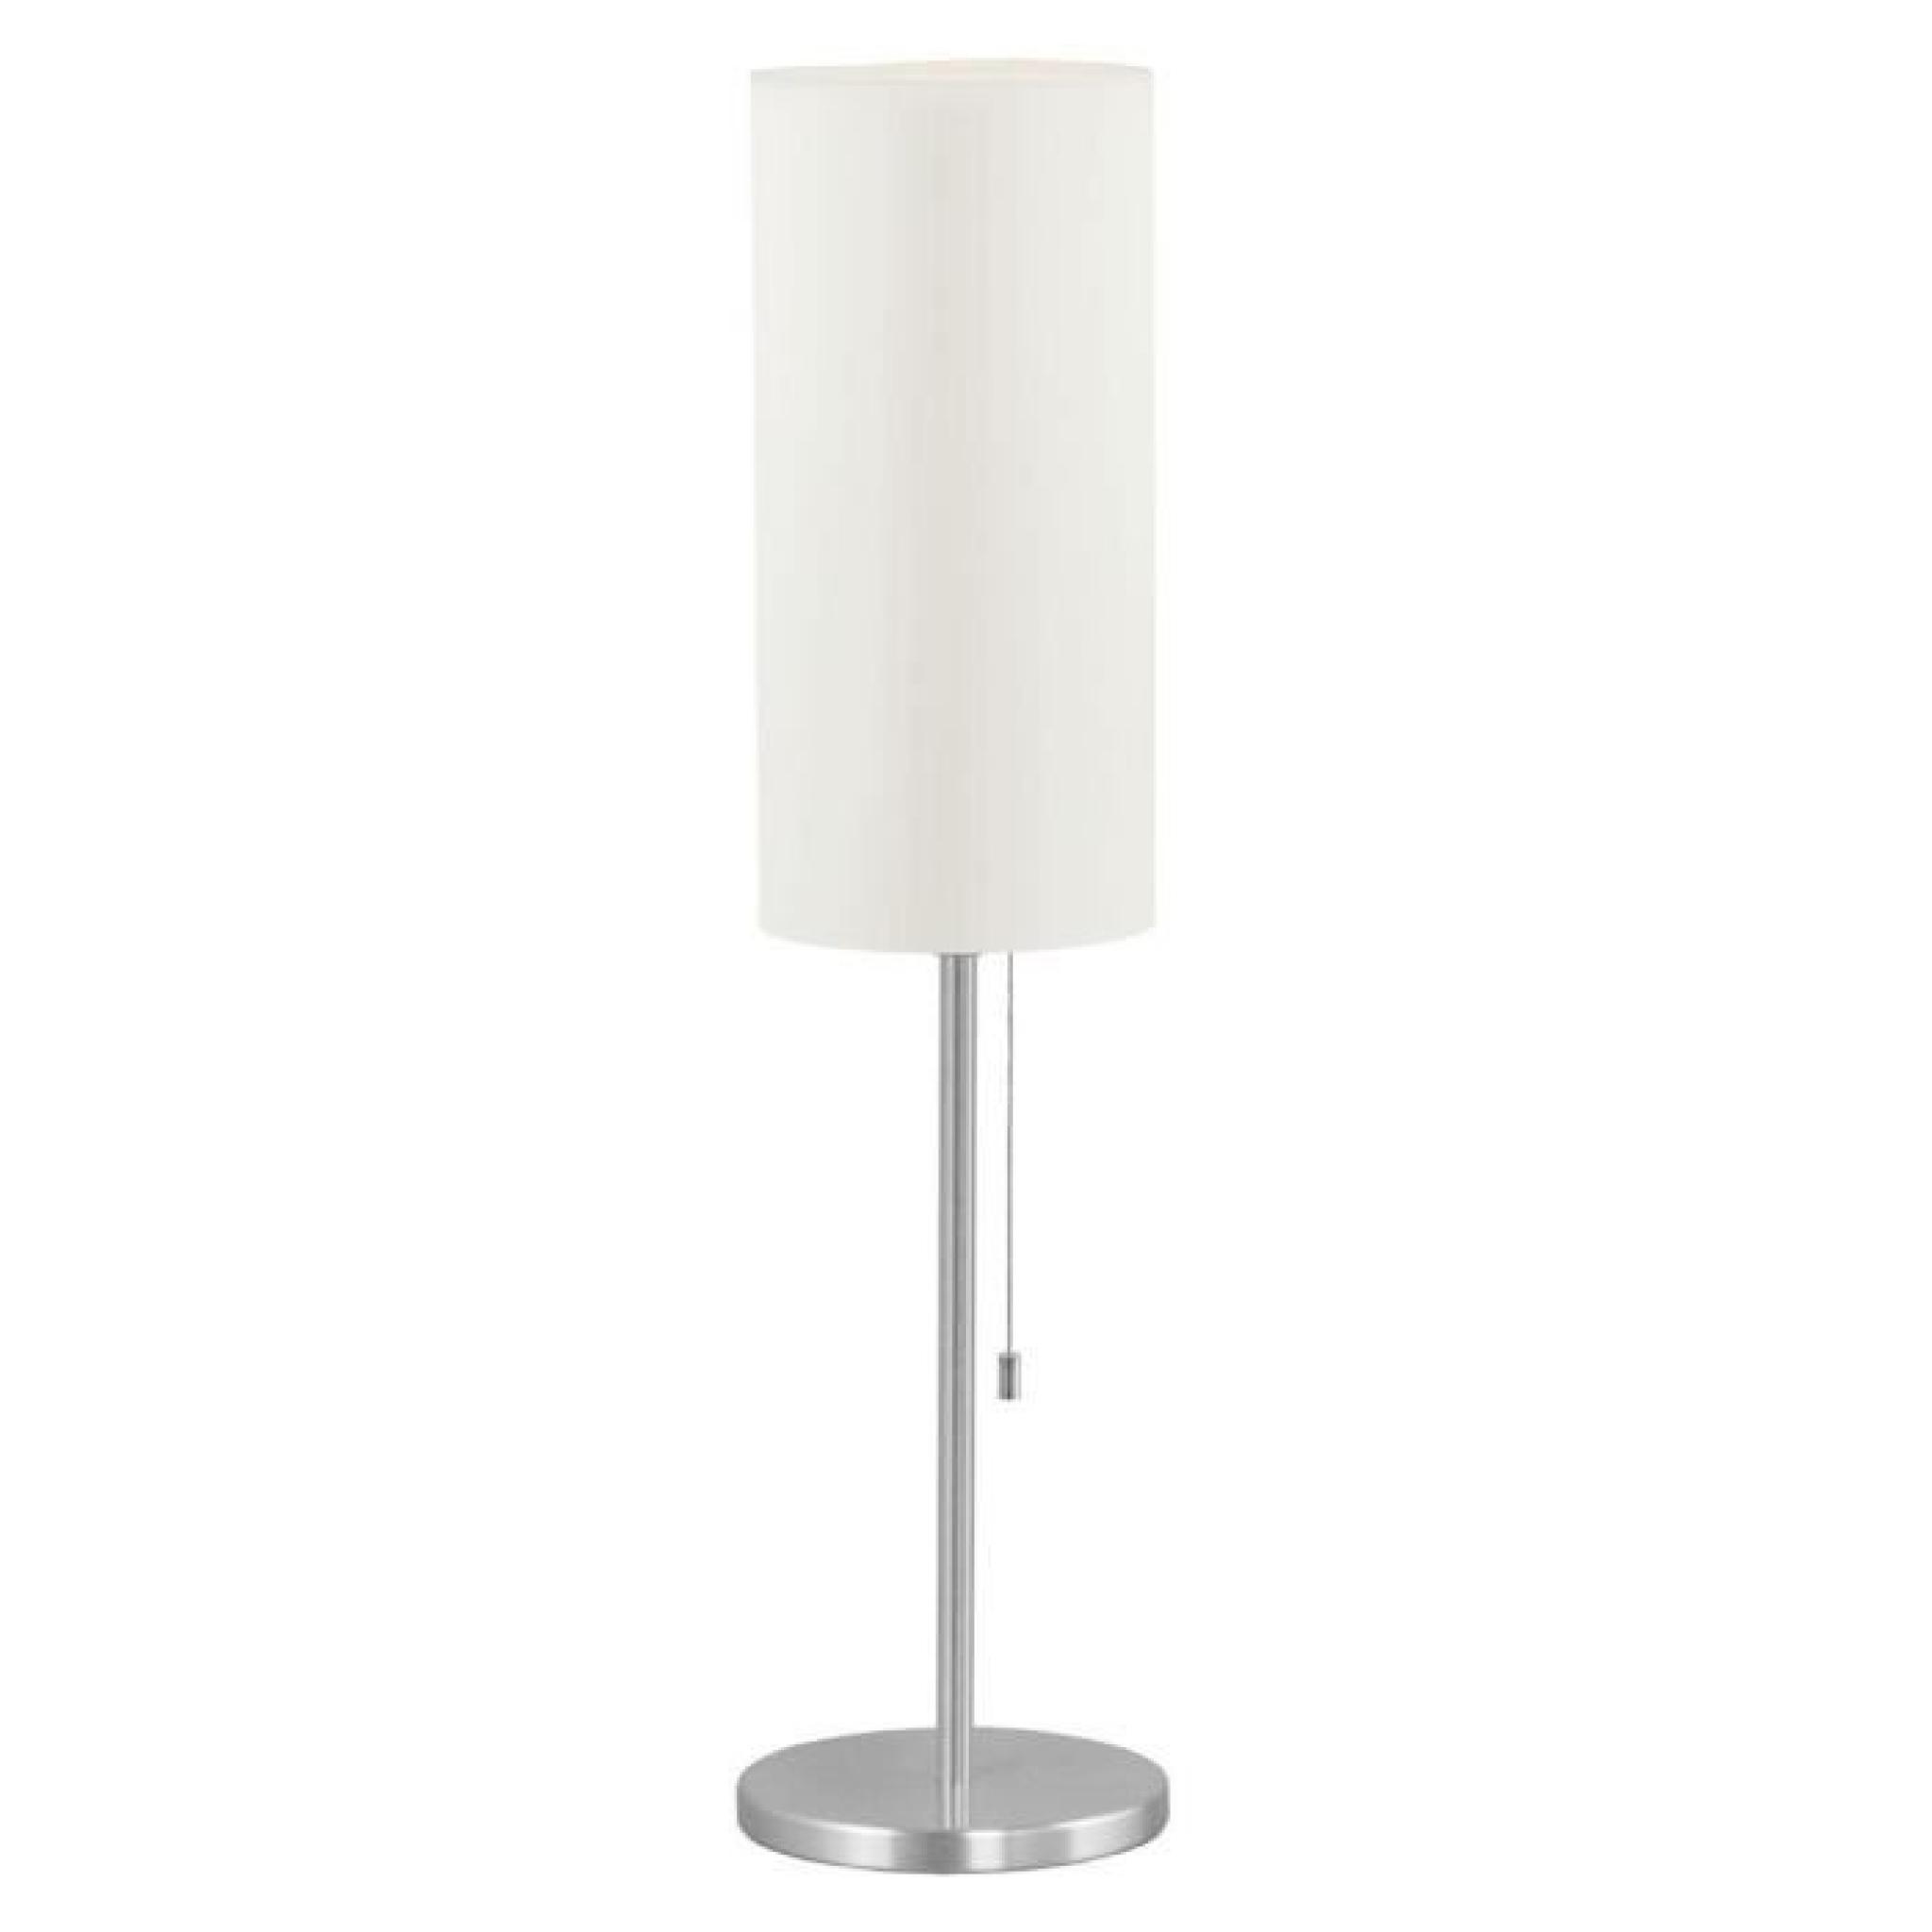 Lampe A Poser Tube aluminium 1x60w - EGLO LIGHTING pas cher